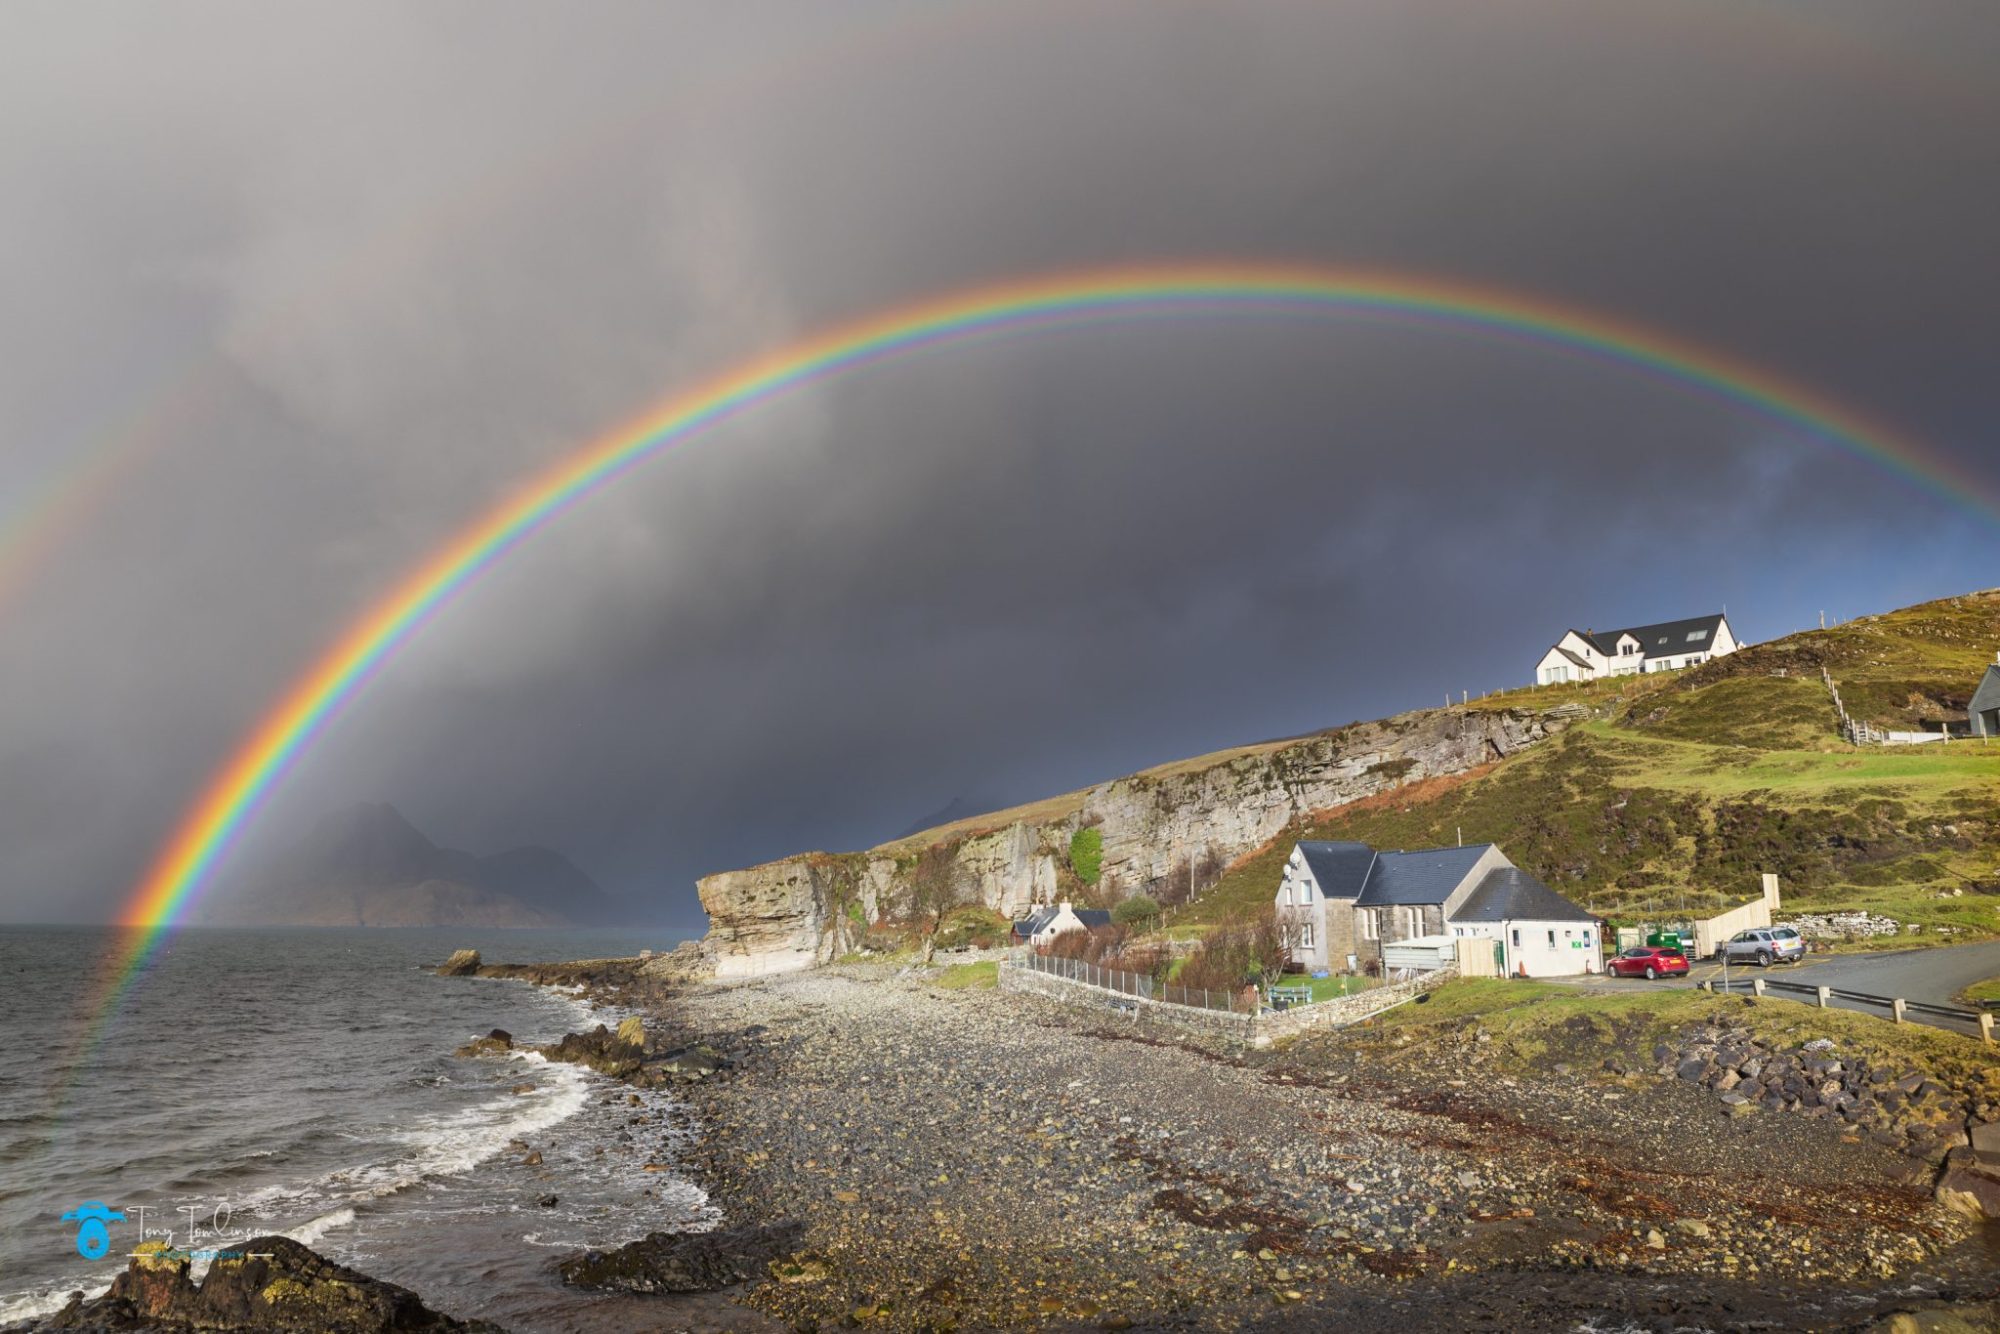 Tony-Tomlinson-Photography-Elgol-Rainbow-Isle-of-Skye-Scotland